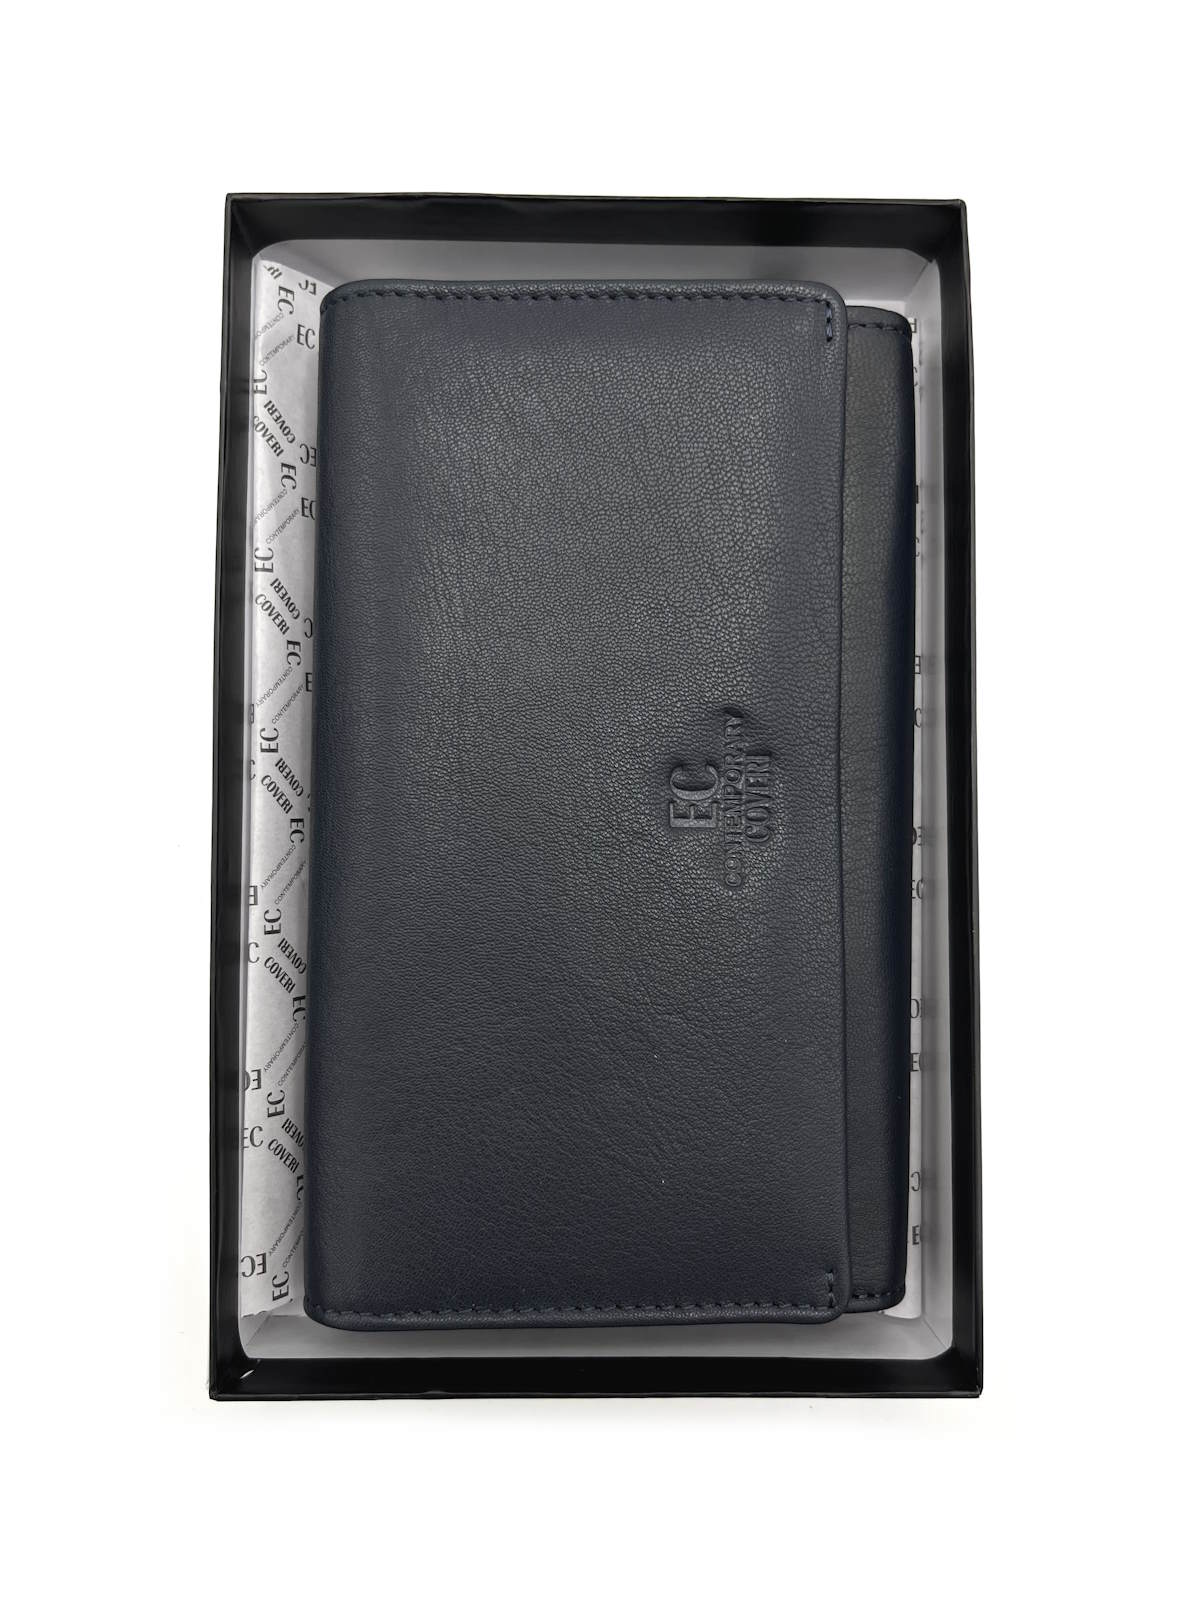 Genuine leather wallet, Brand EC COVERI, art. EC23760-30